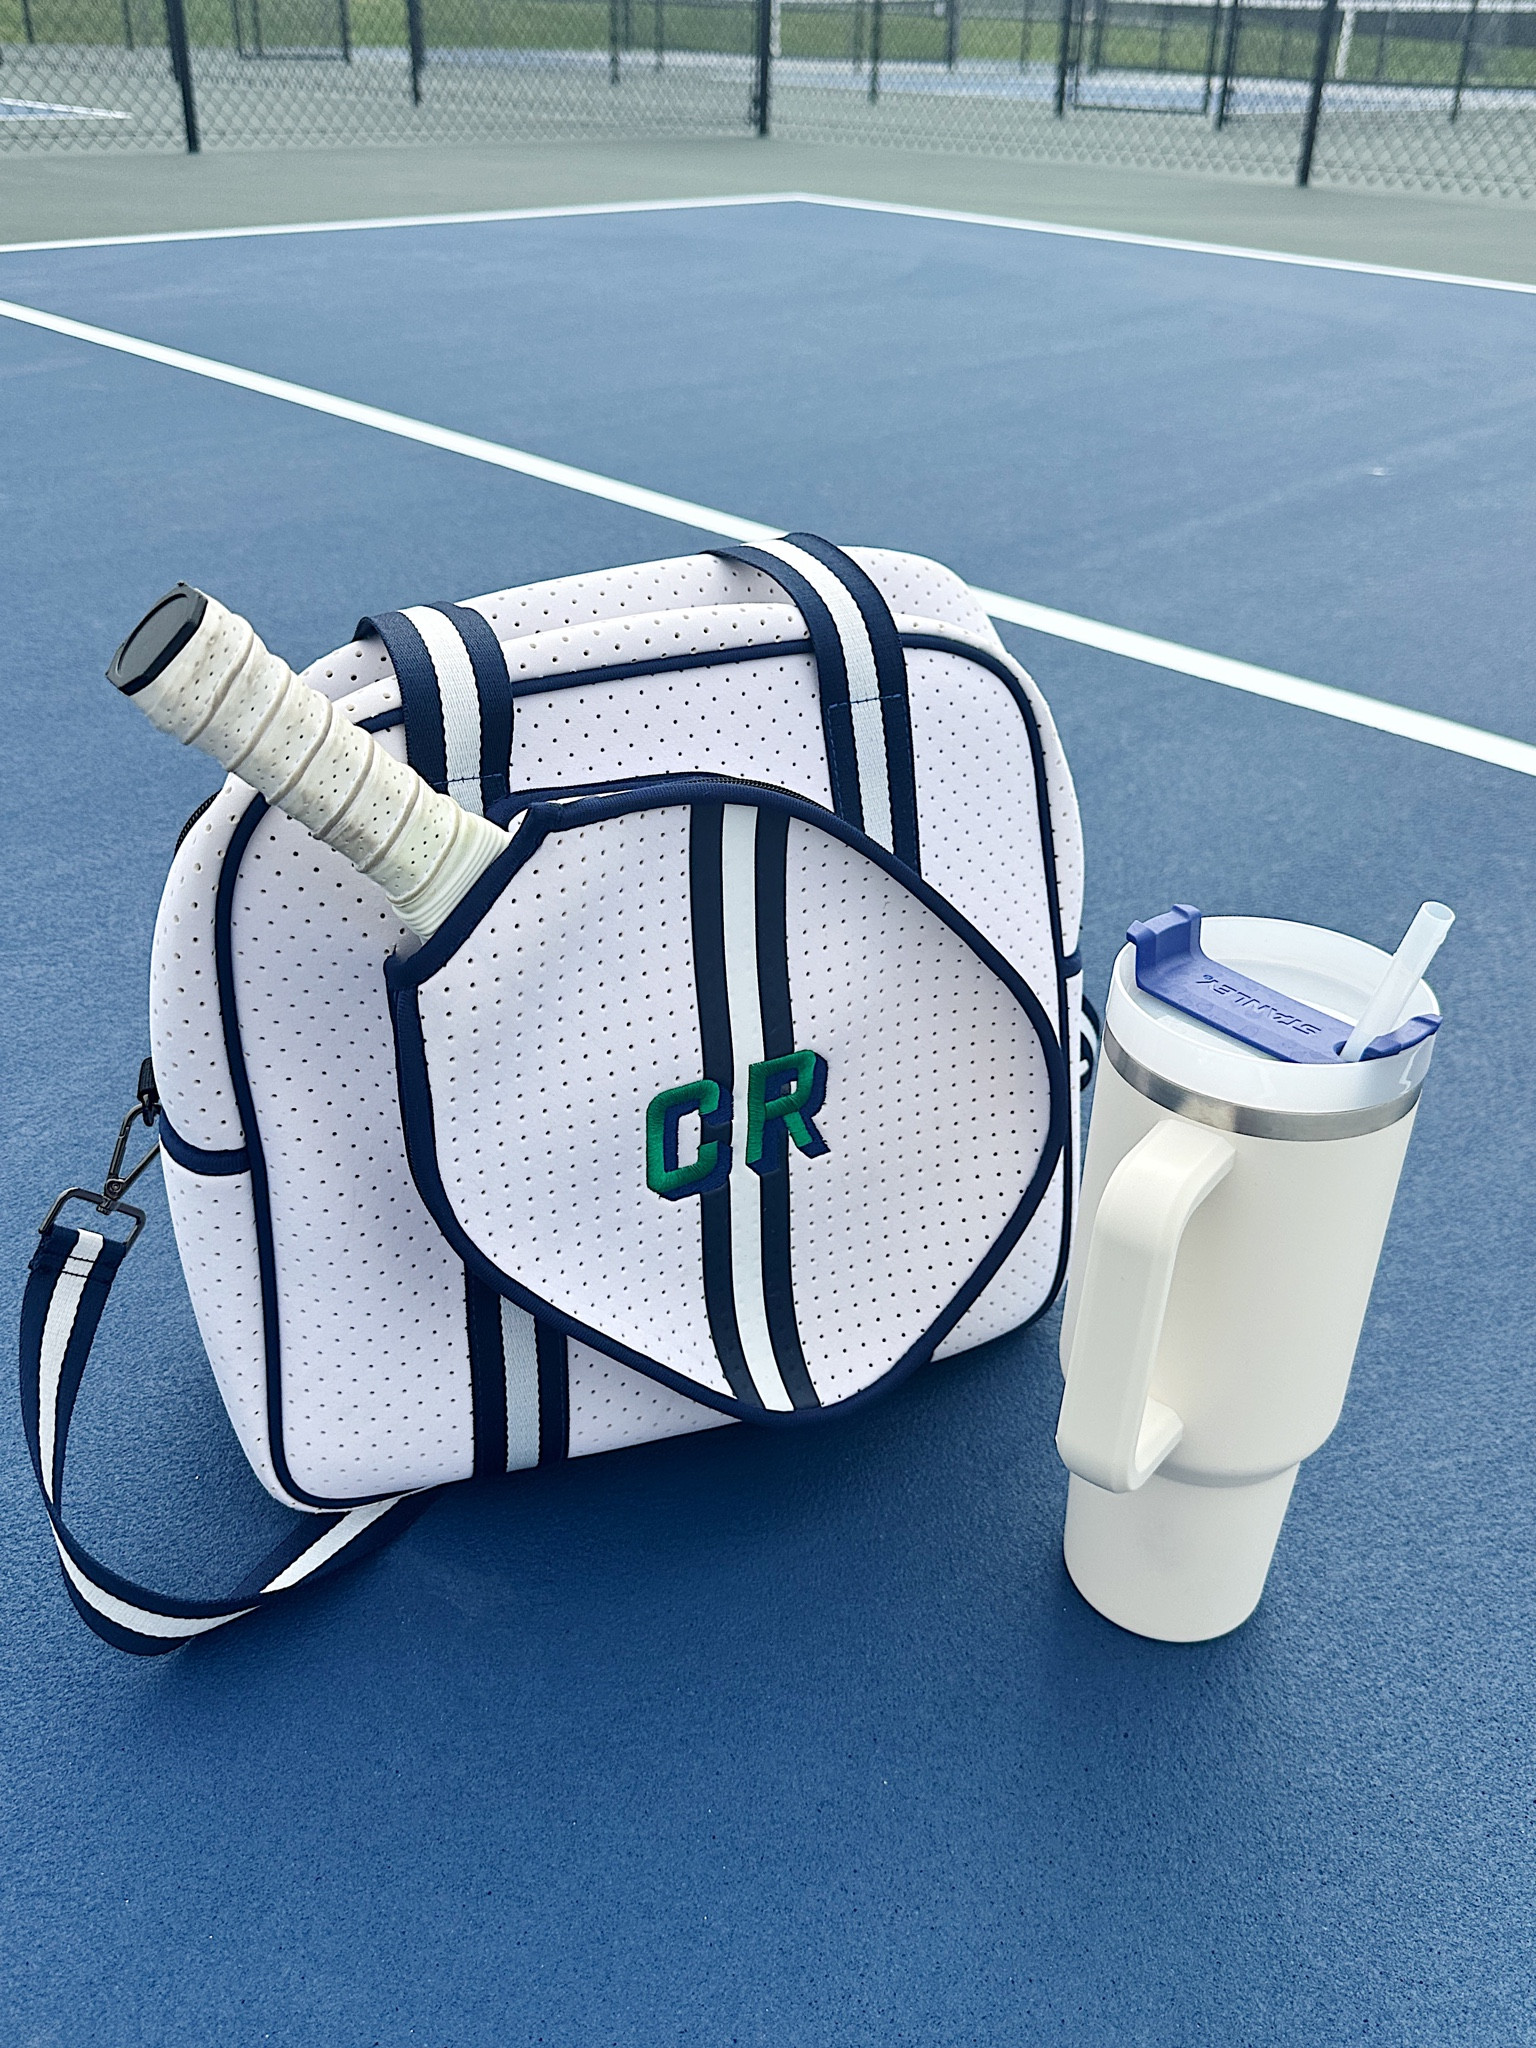 Monogrammed Pickleball / Tennis Bag - Sprinkled With Pink